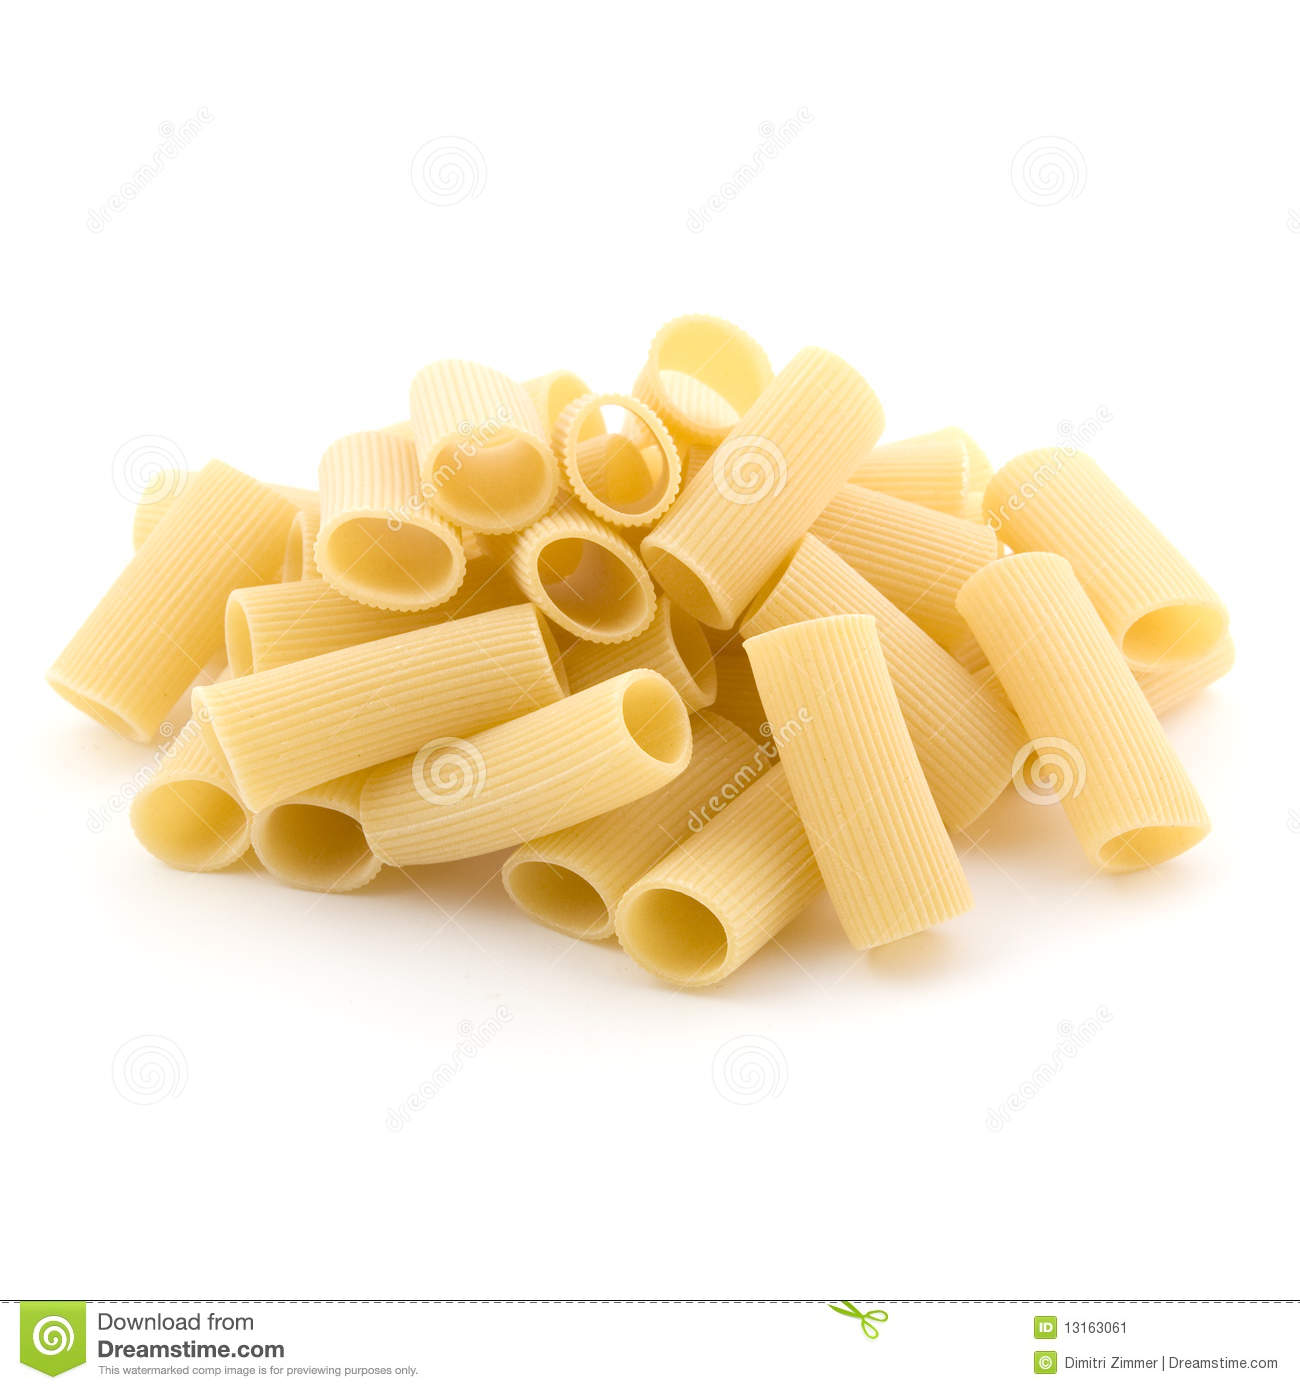 Pasta Rigatoni Stock Image   Image  13163061